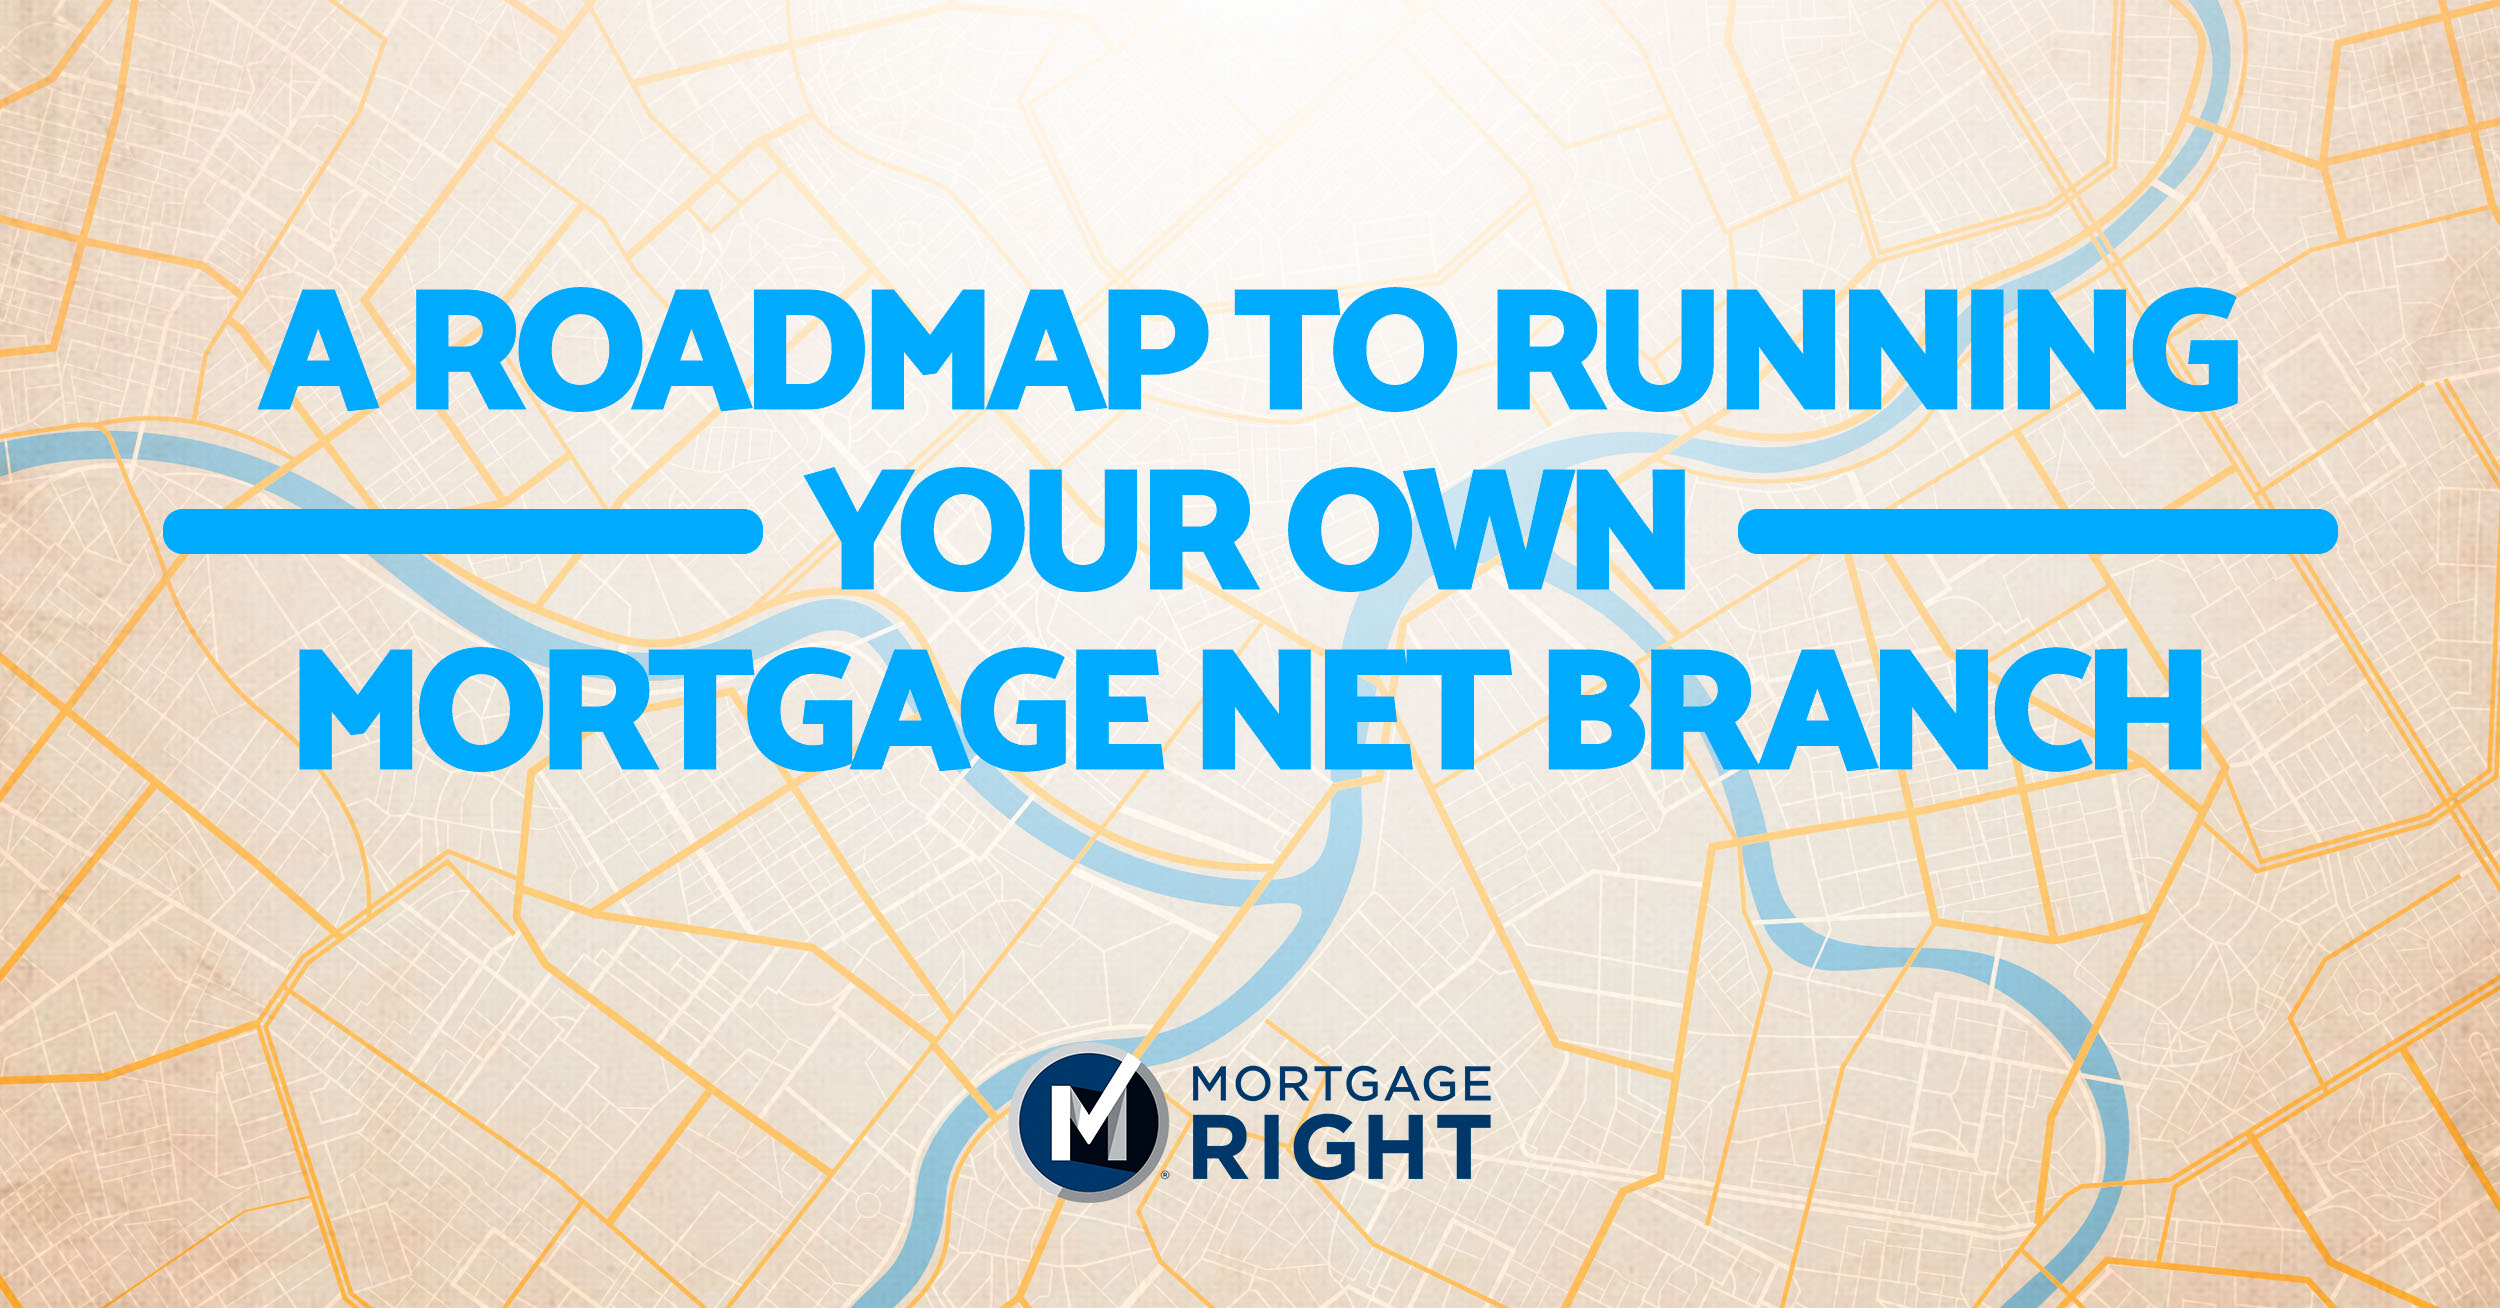 mortgage net branch roadmap